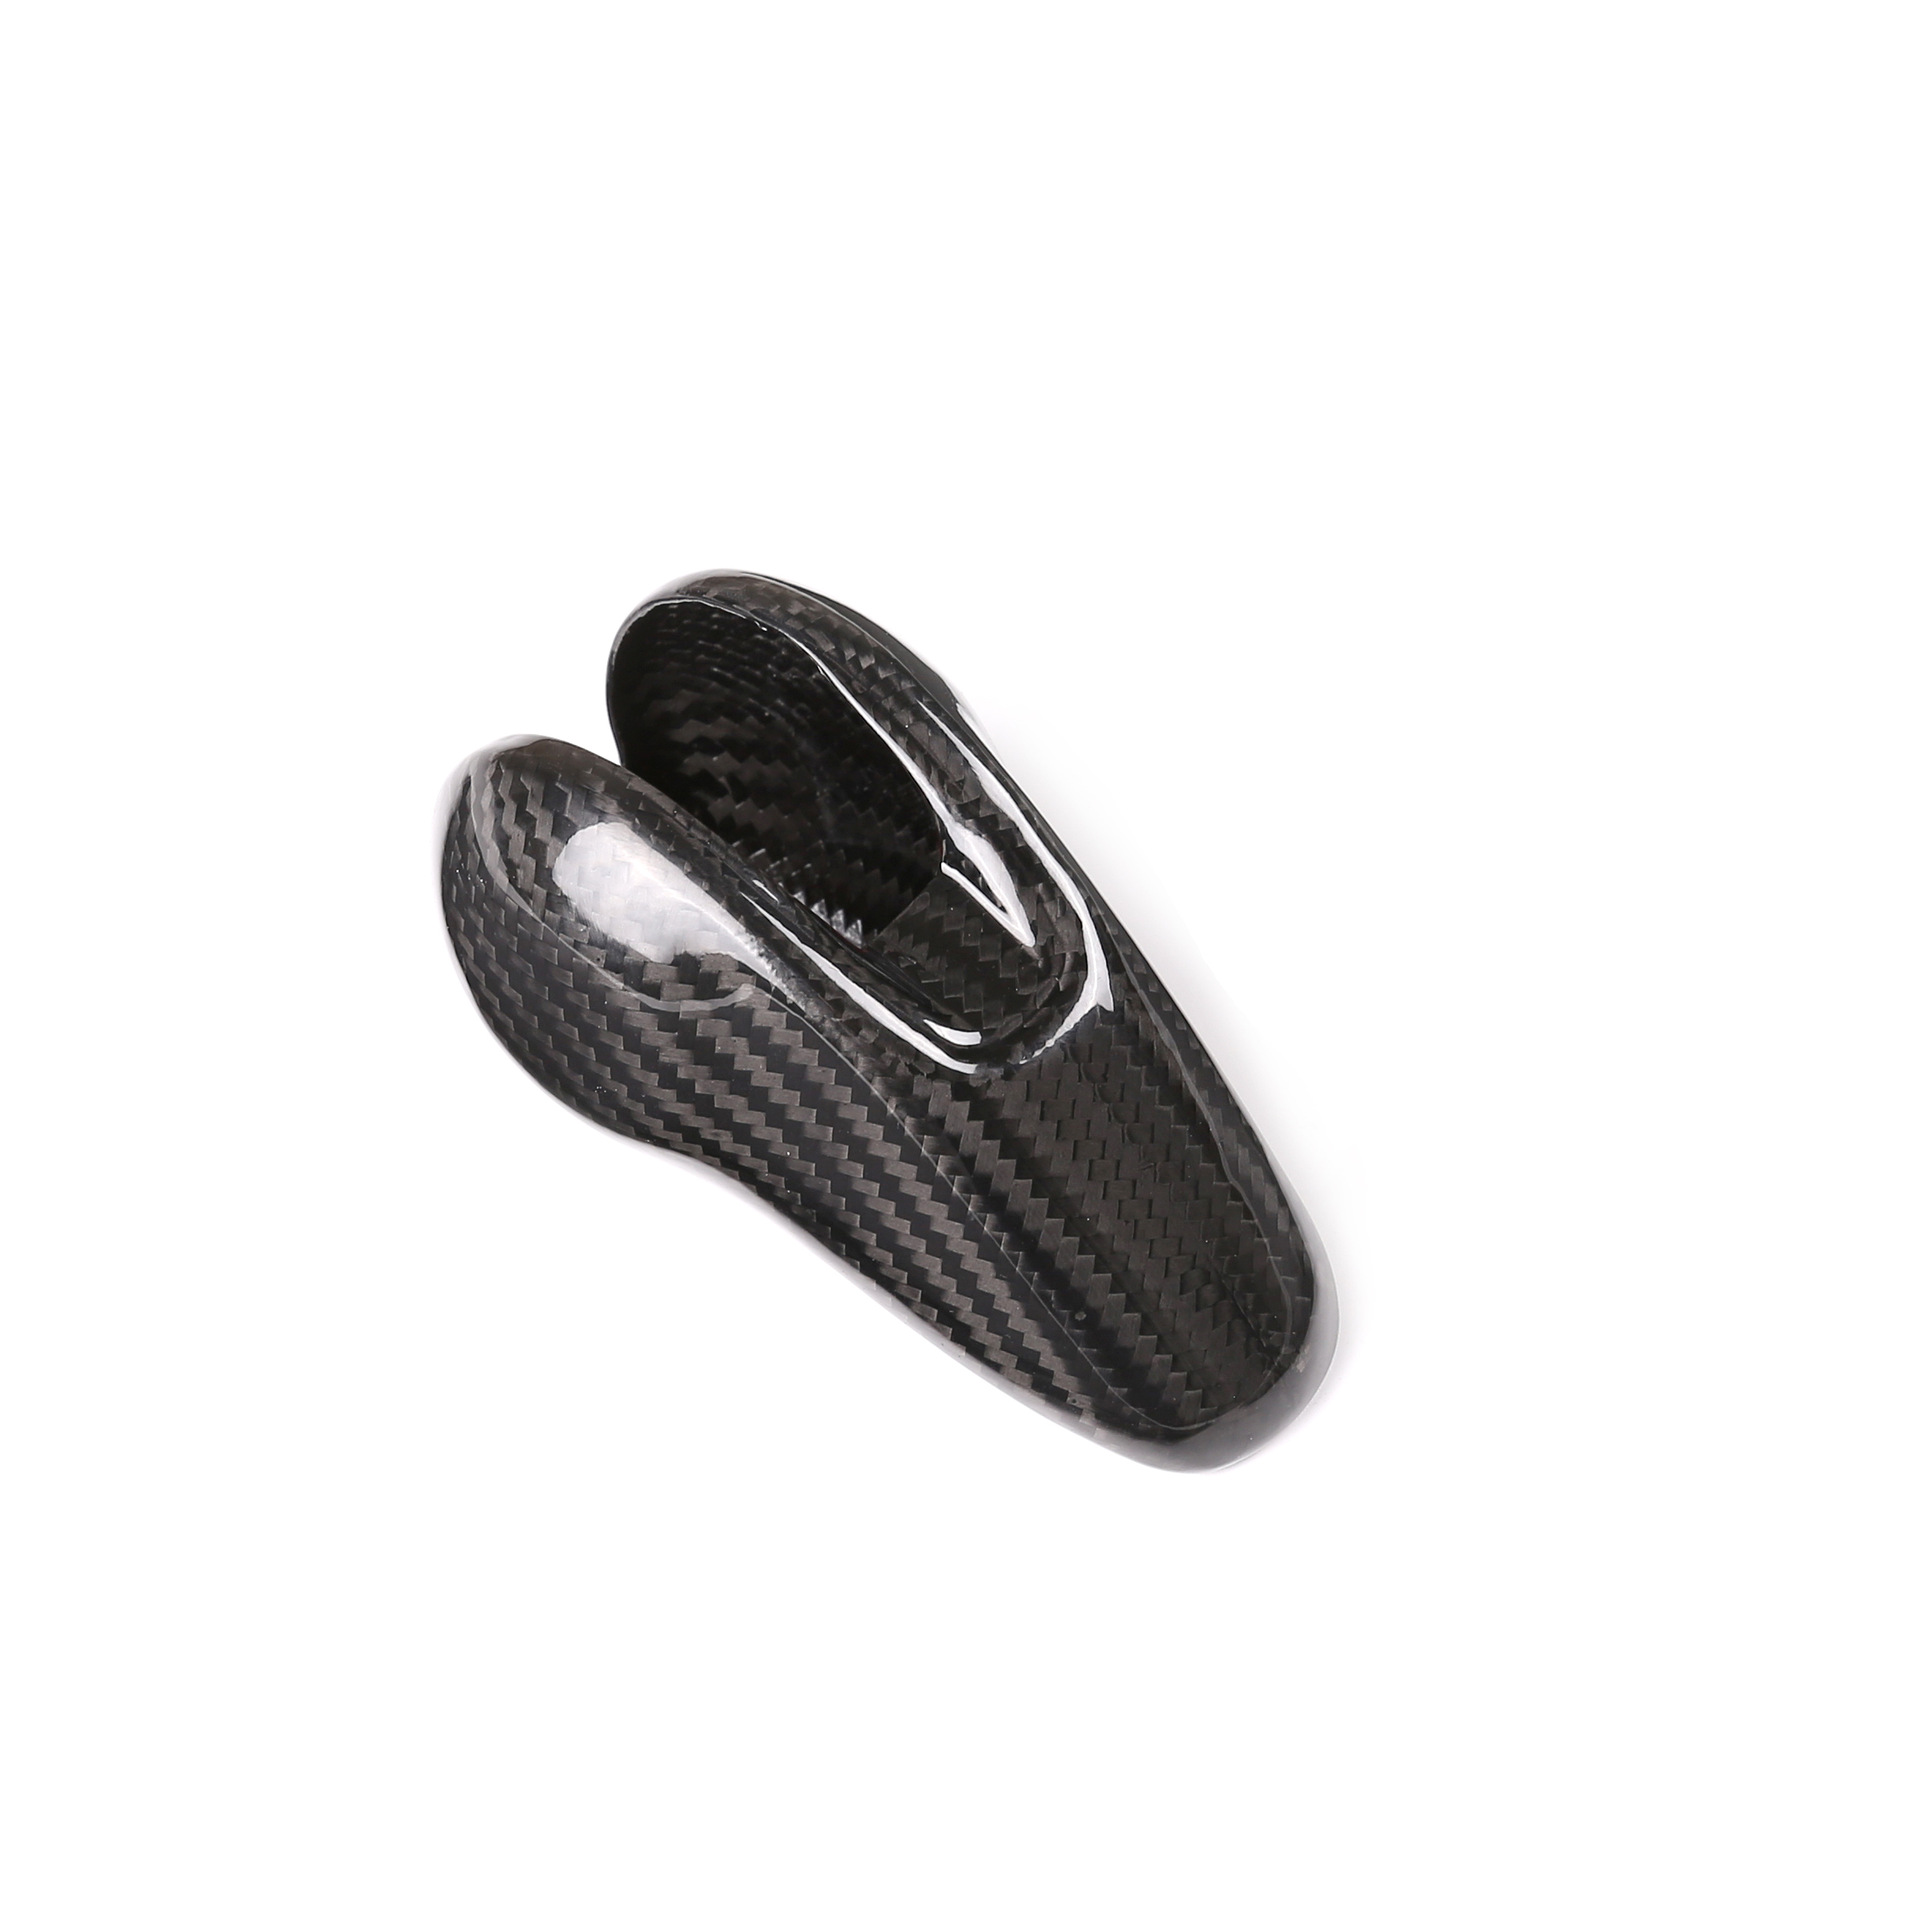 Carbon fiber gear handle cover